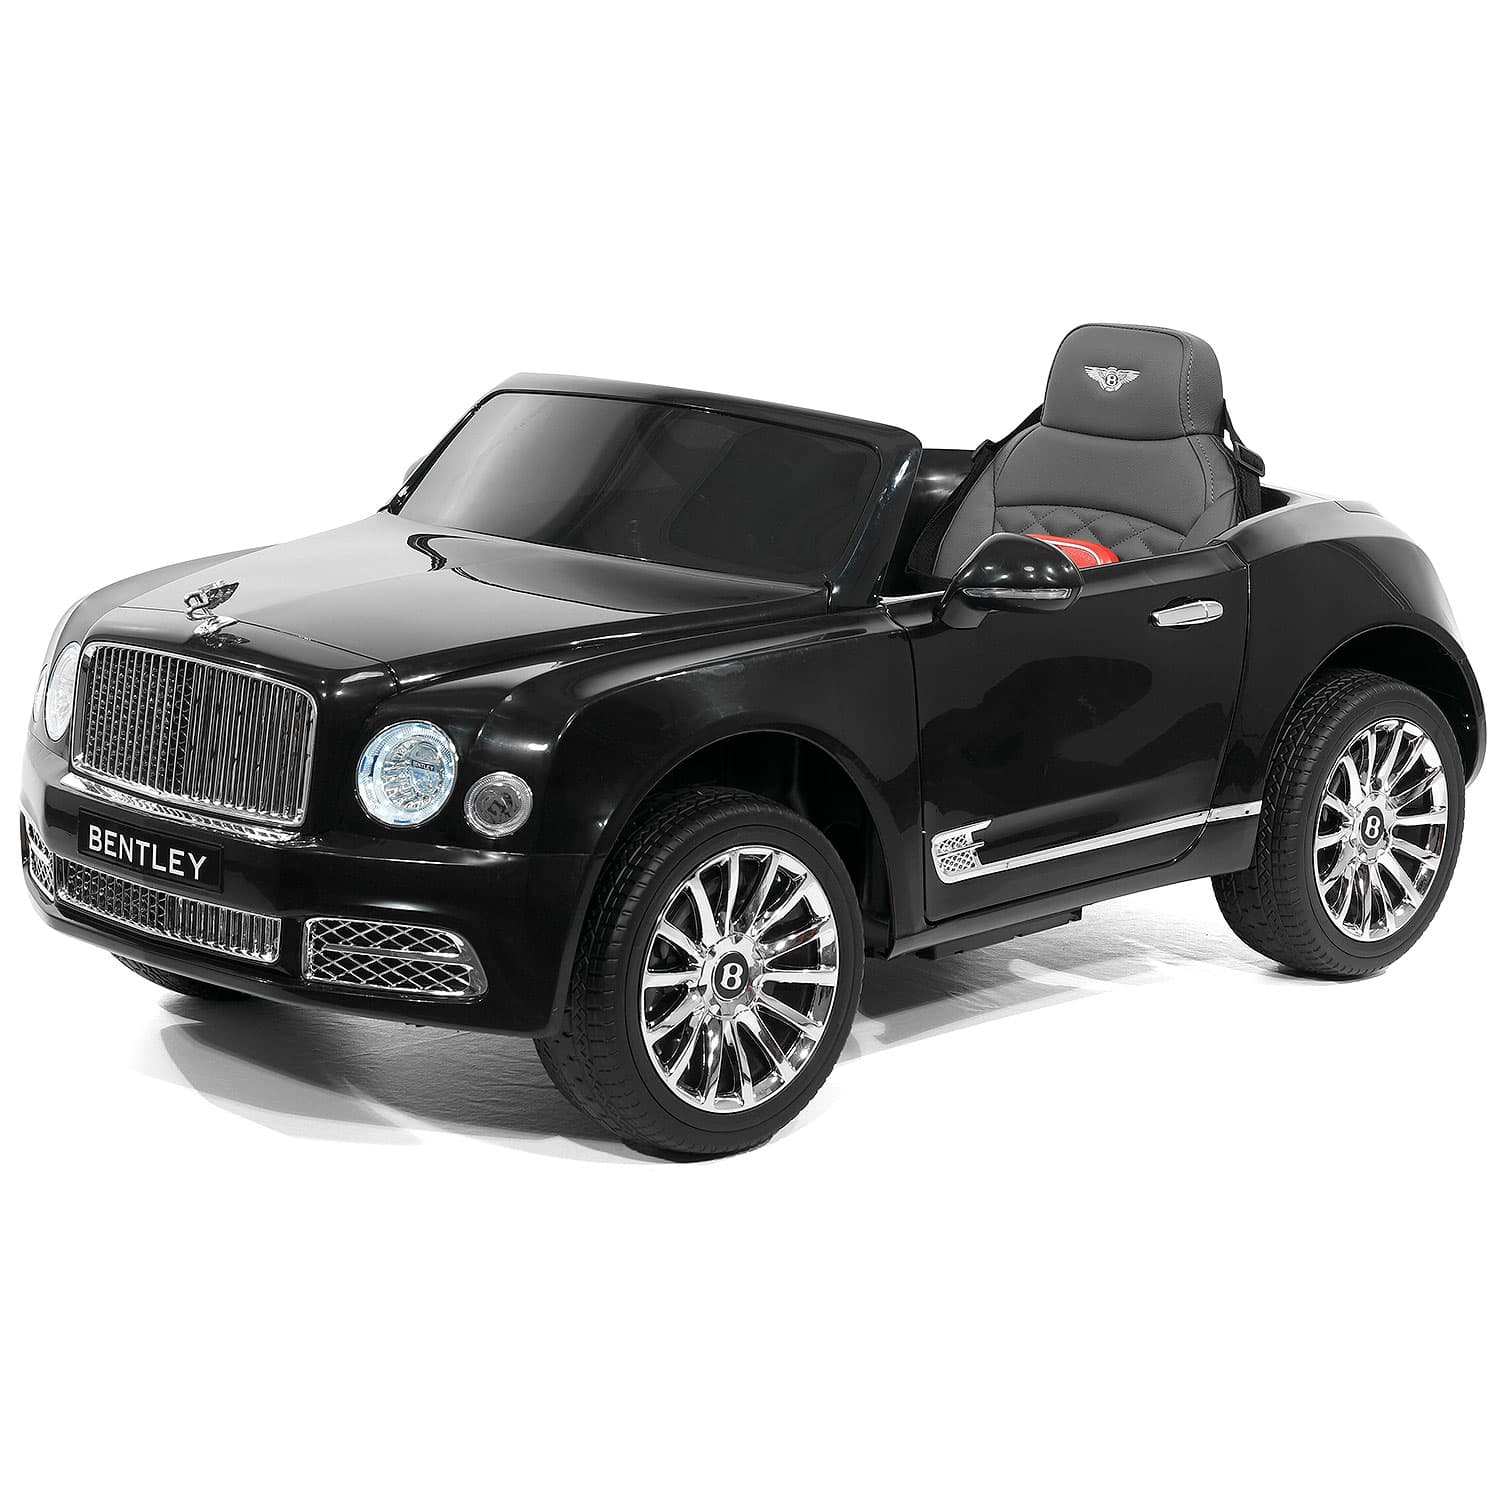 Bentley Mulsanne 12v Kids Ride On Car With Parental Remote Control | Black